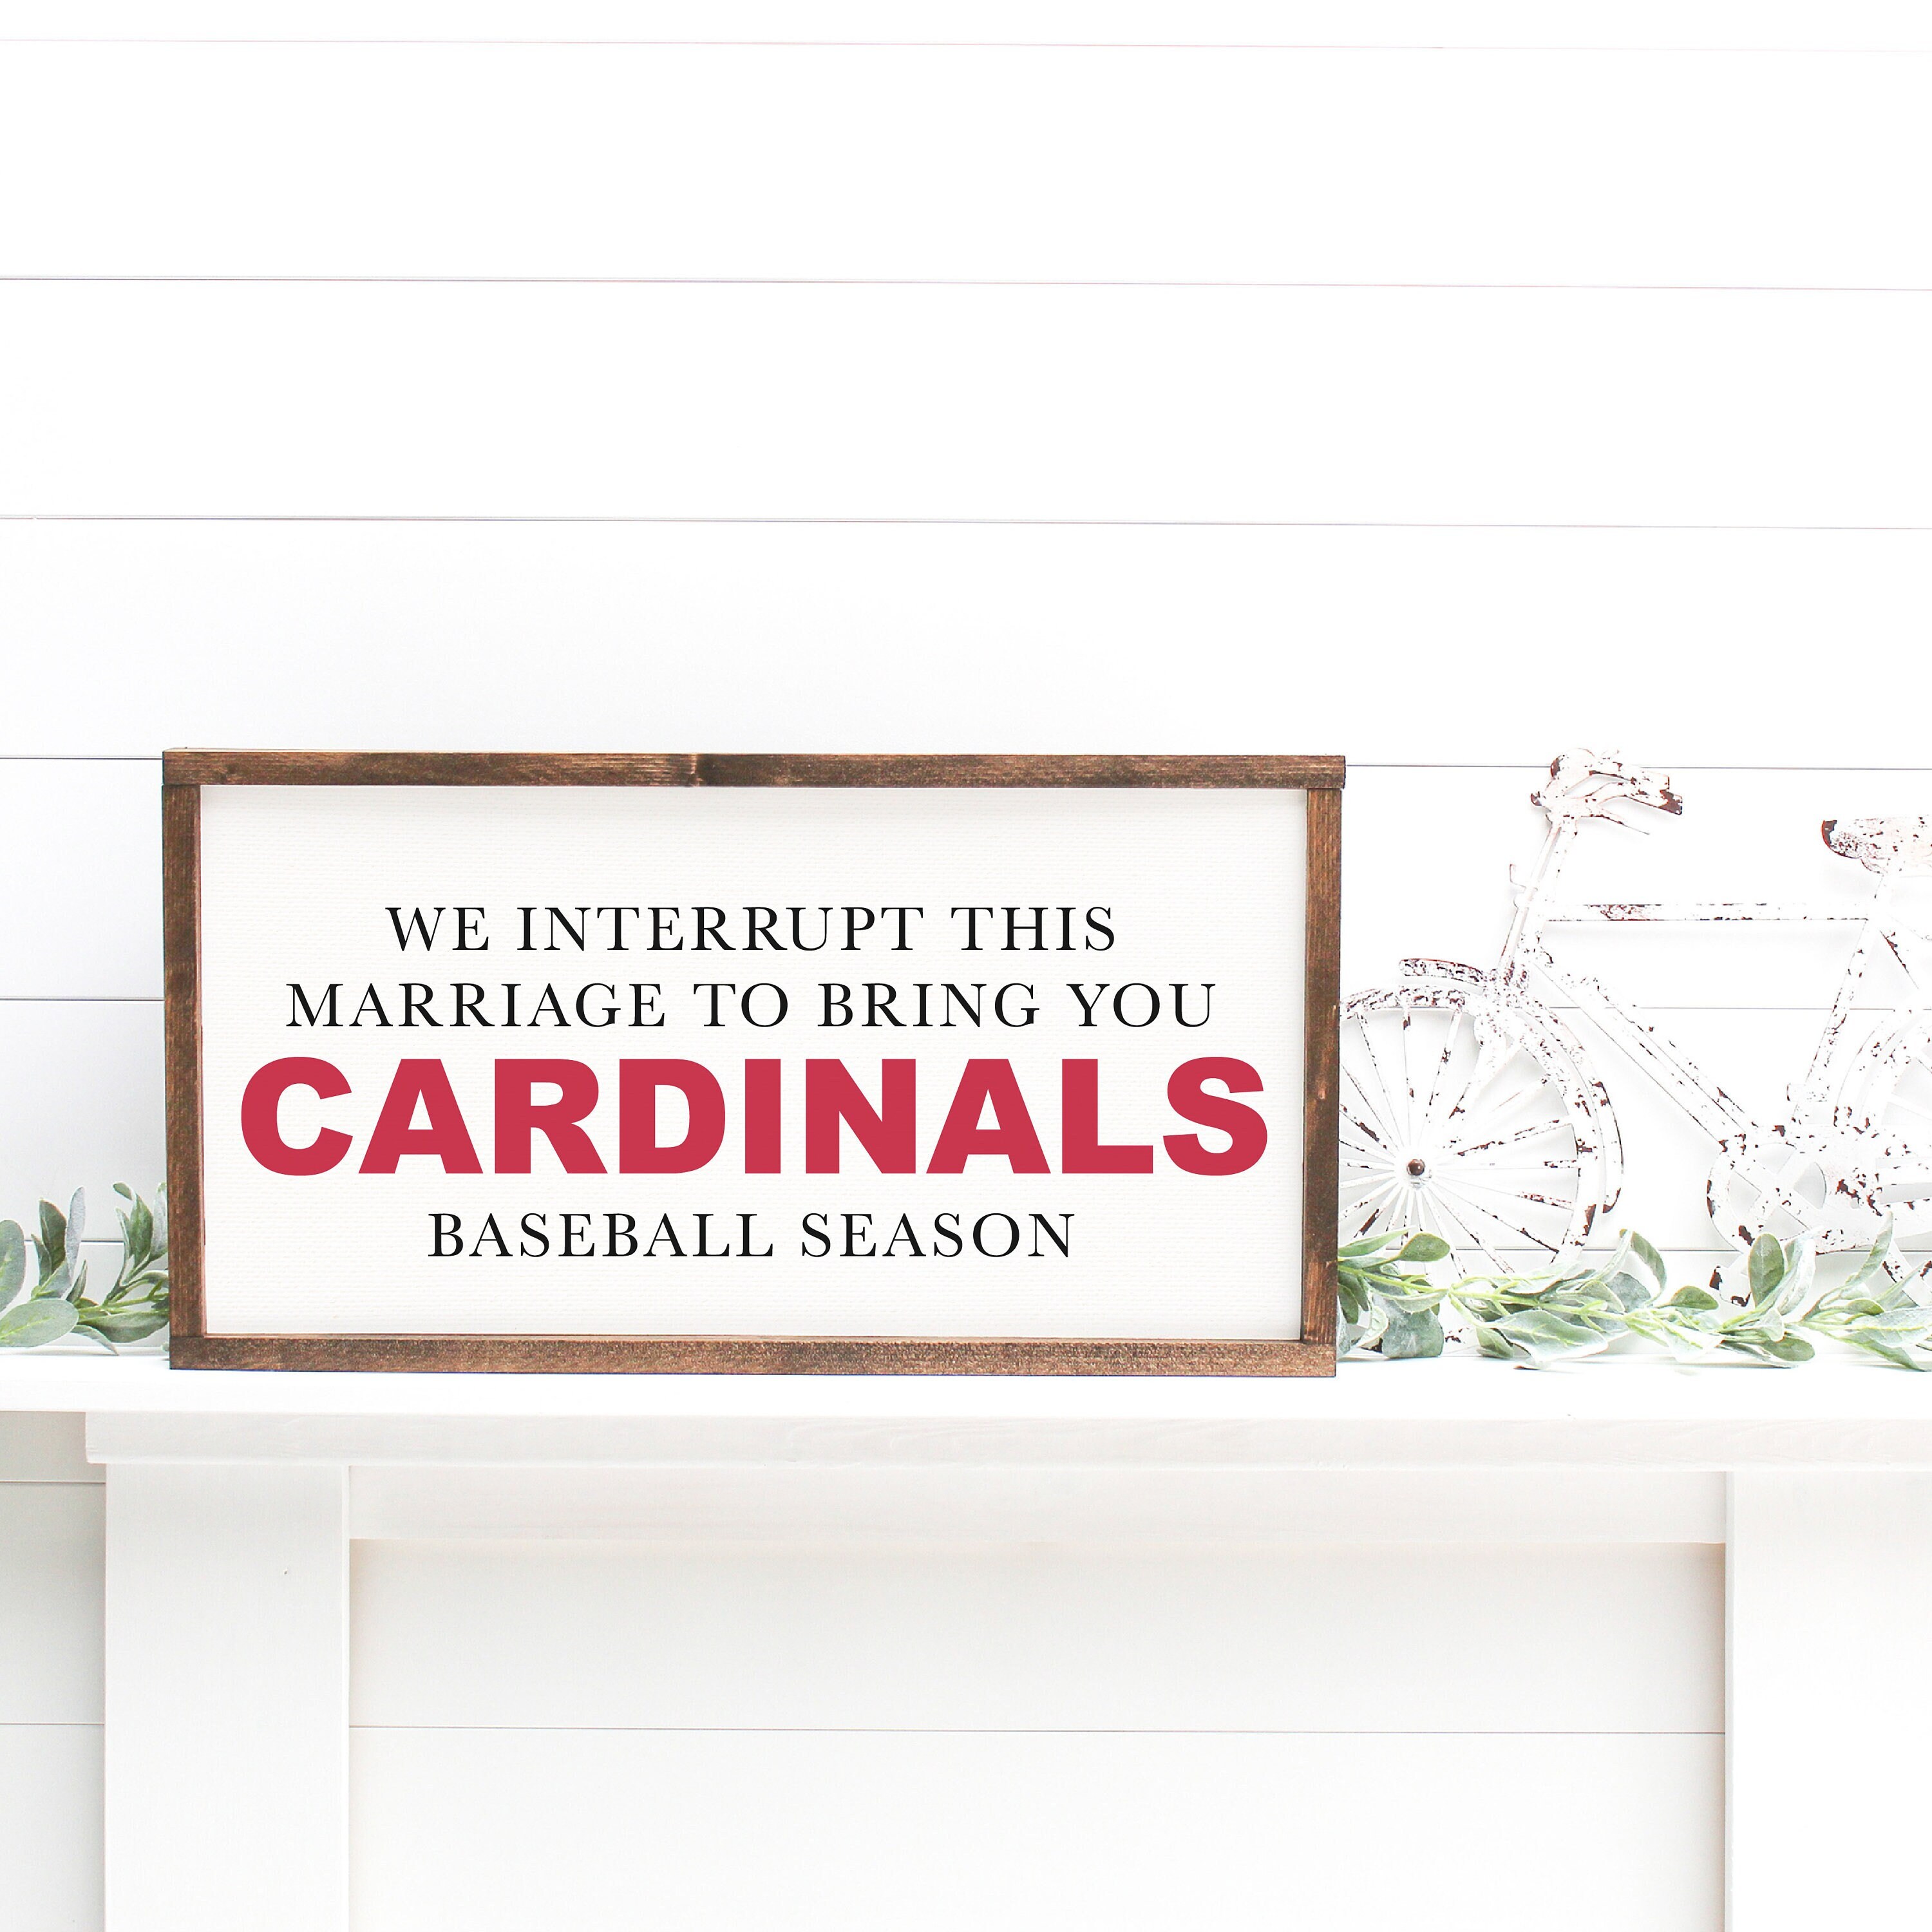  Decorative Concepts Saint Louis Cardinals Baseball 16